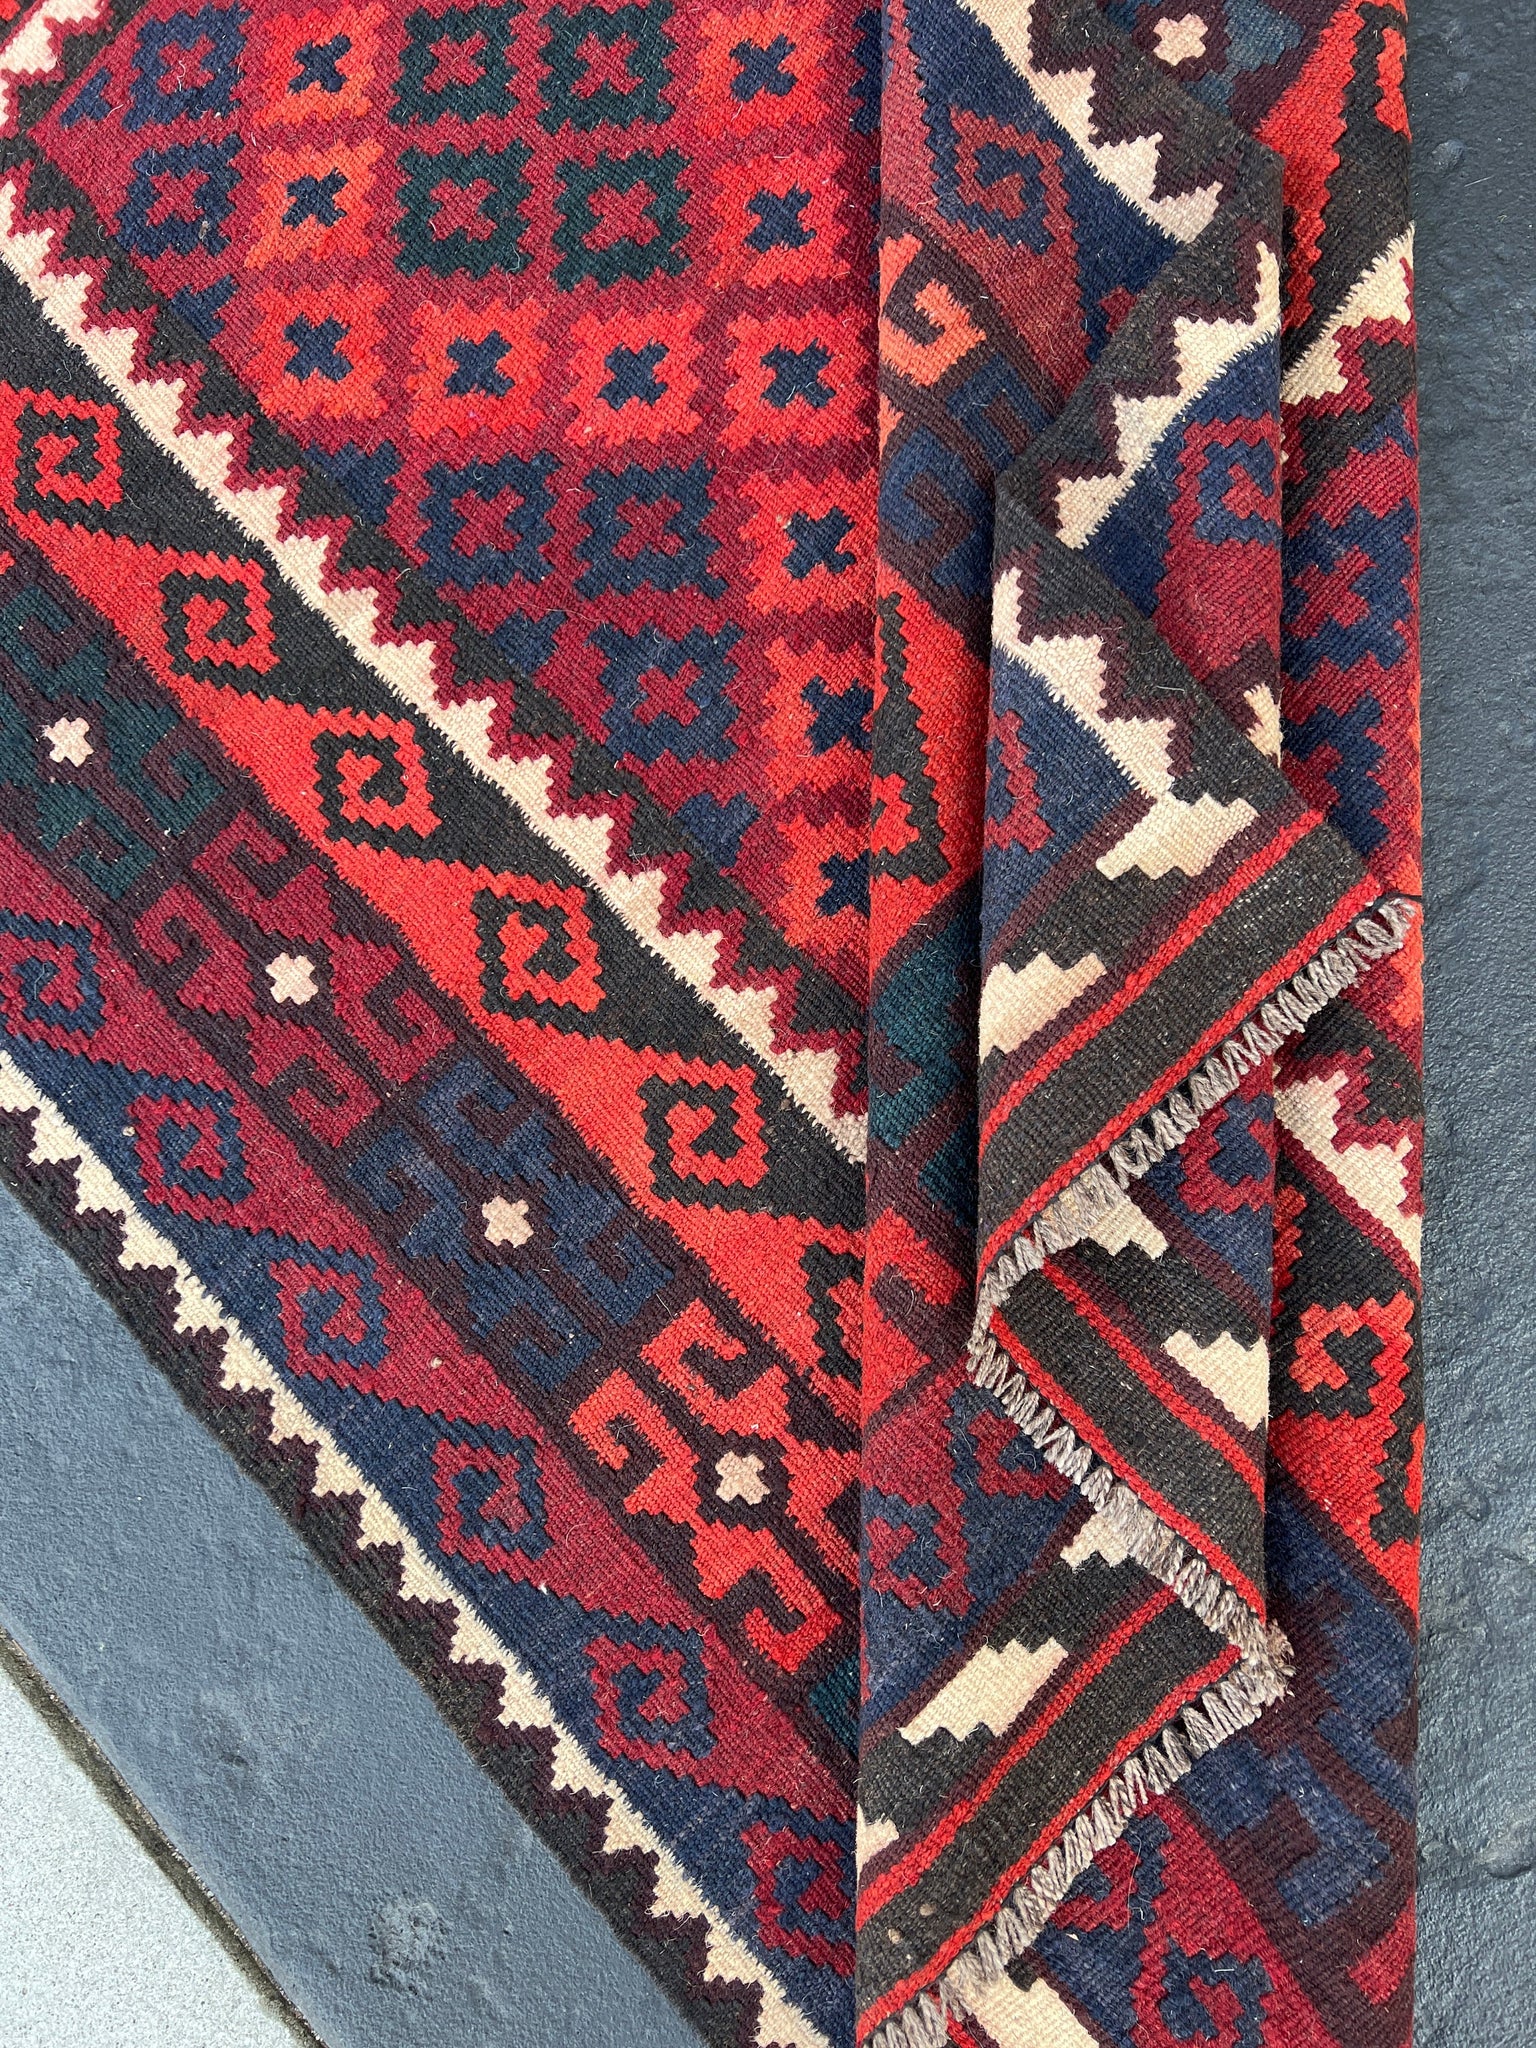 3x5 (100x180) Handmade Afghan Kilim Rug | Brick Red Midnight Blue Black Ivory Coral Orange | Hand Knotted Geometric Persian Wool